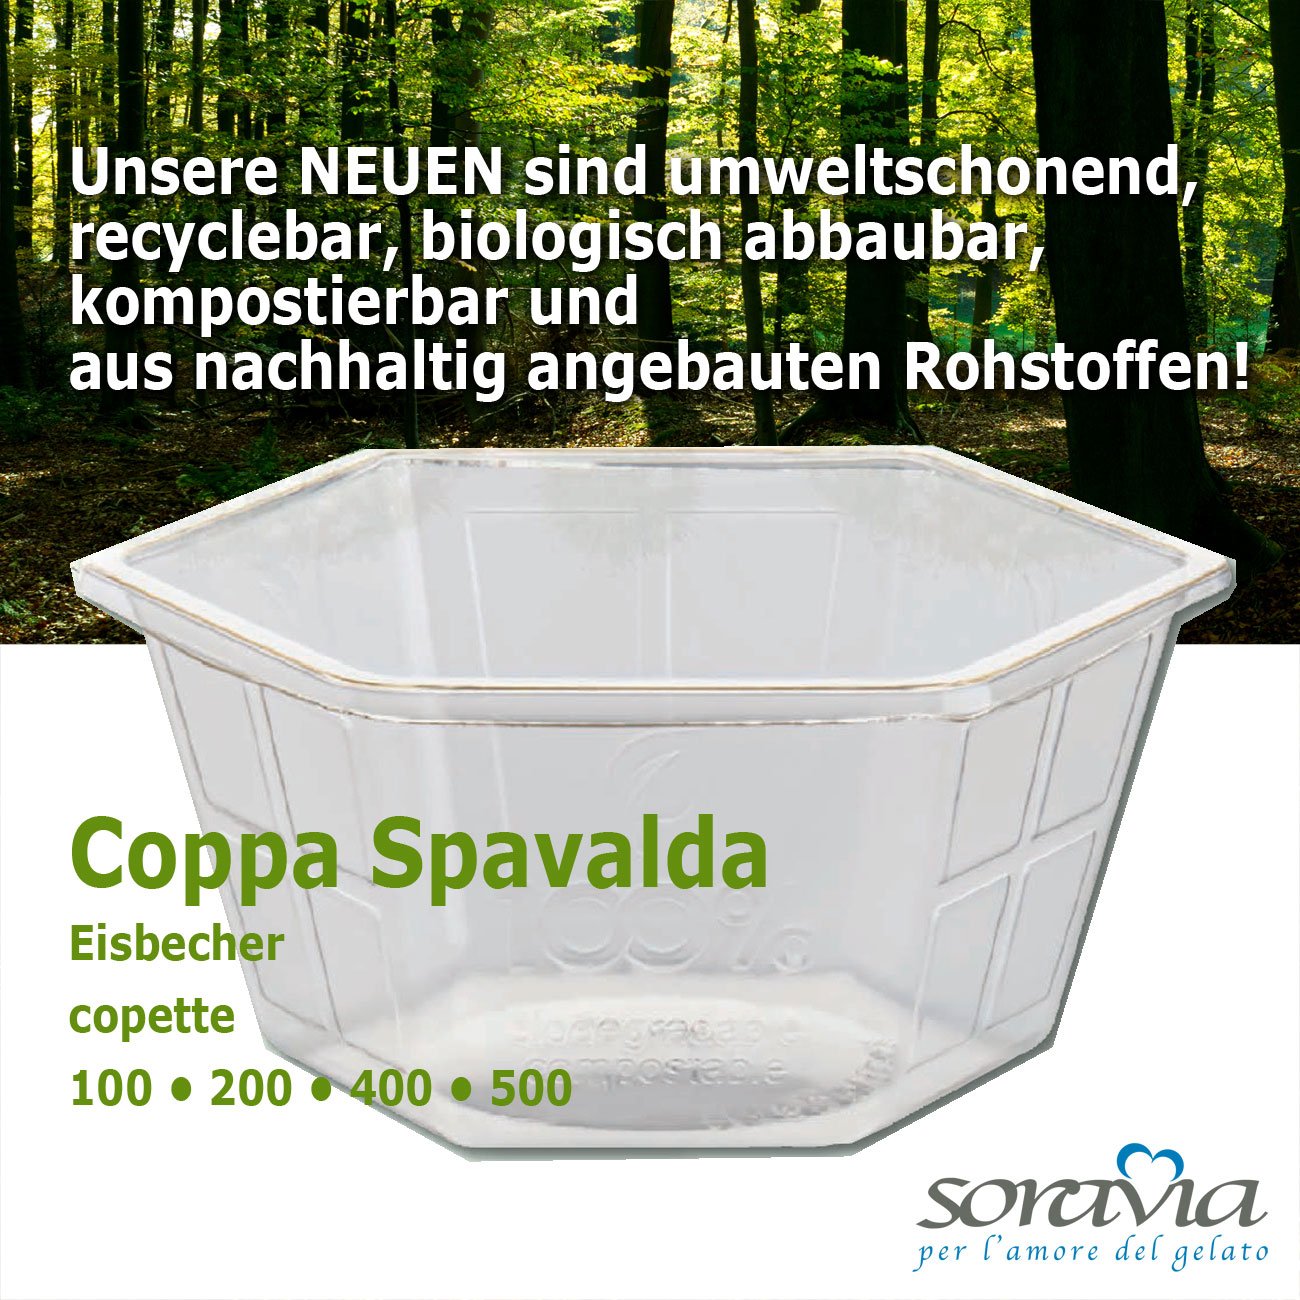 Coppa Spavalda 100 - box 2400 pieces - Ice cup biodegradable - coppa plastica 